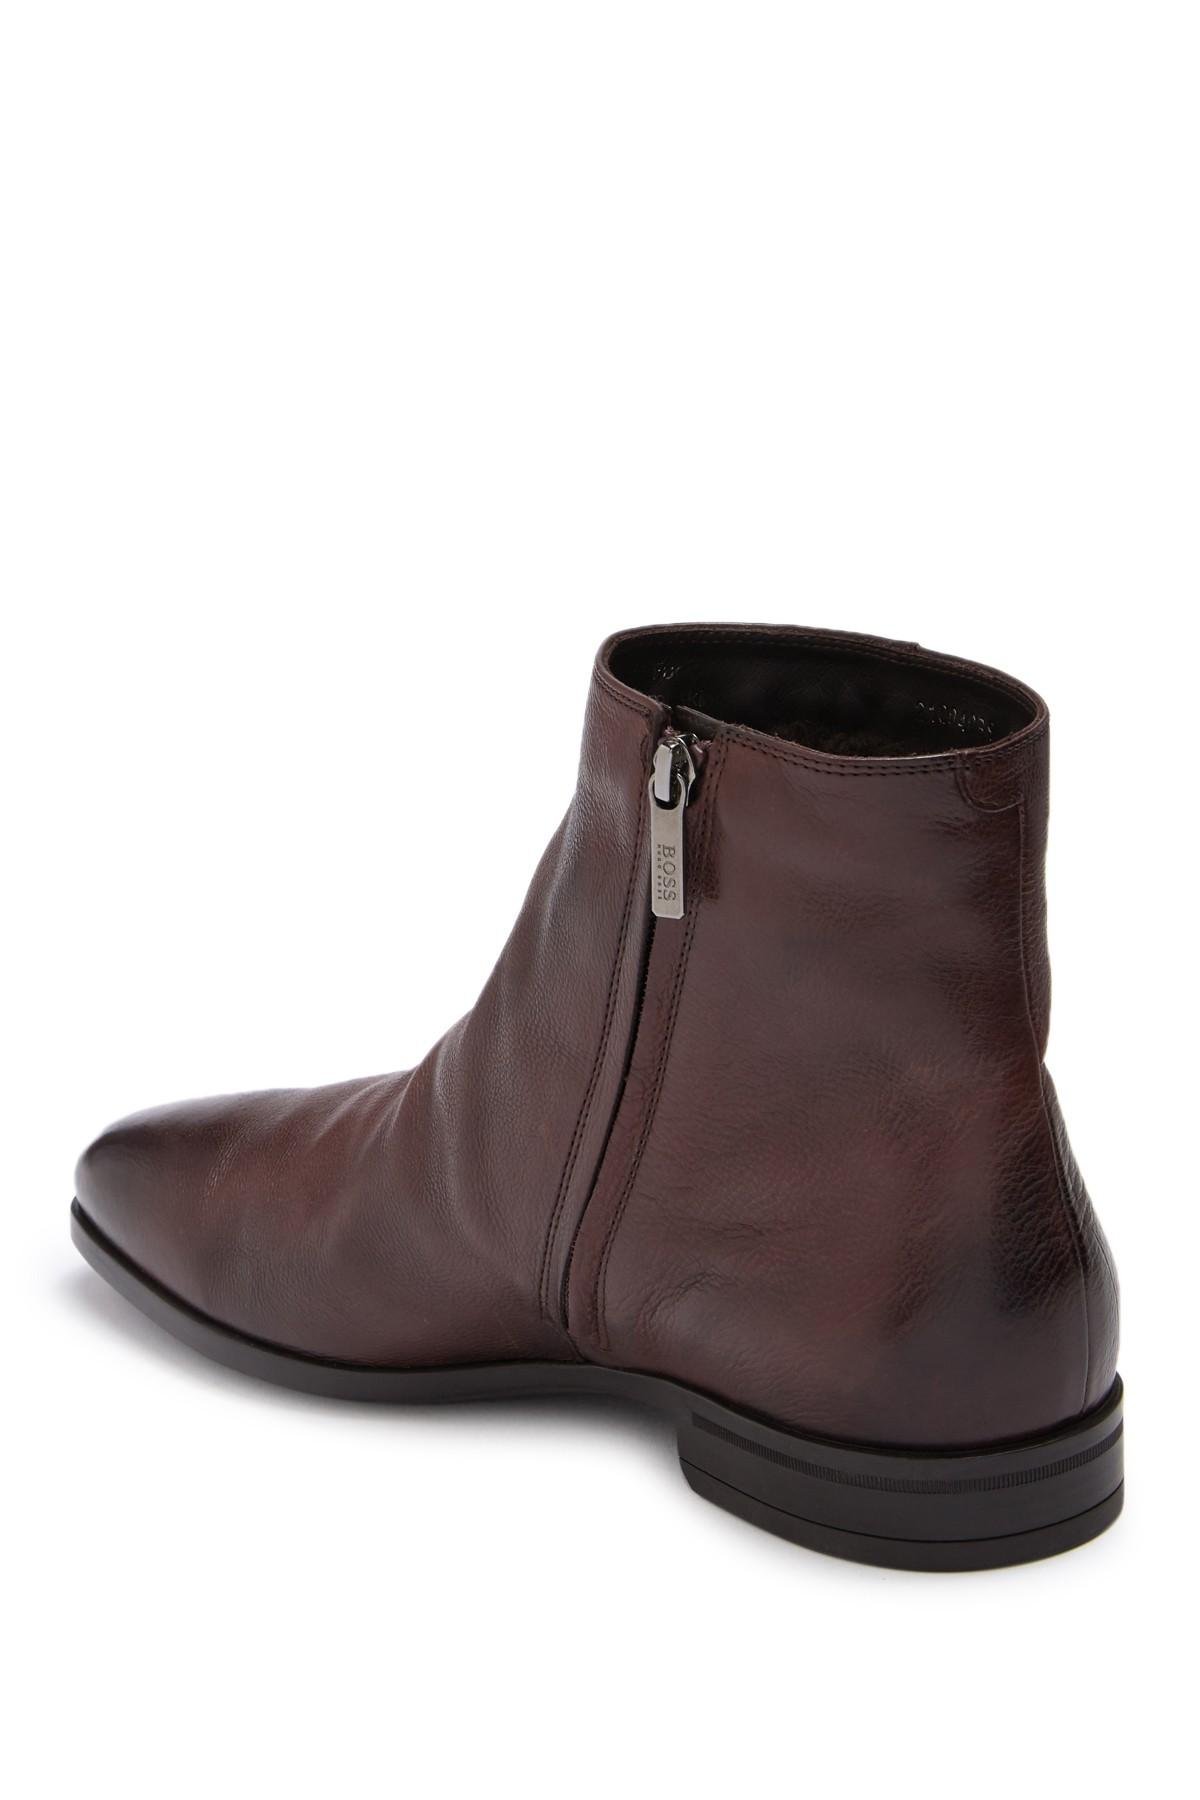 Ultimate pisk Quagmire BOSS by HUGO BOSS Kensington Leather Zip Ankle Boot in Brown for Men | Lyst